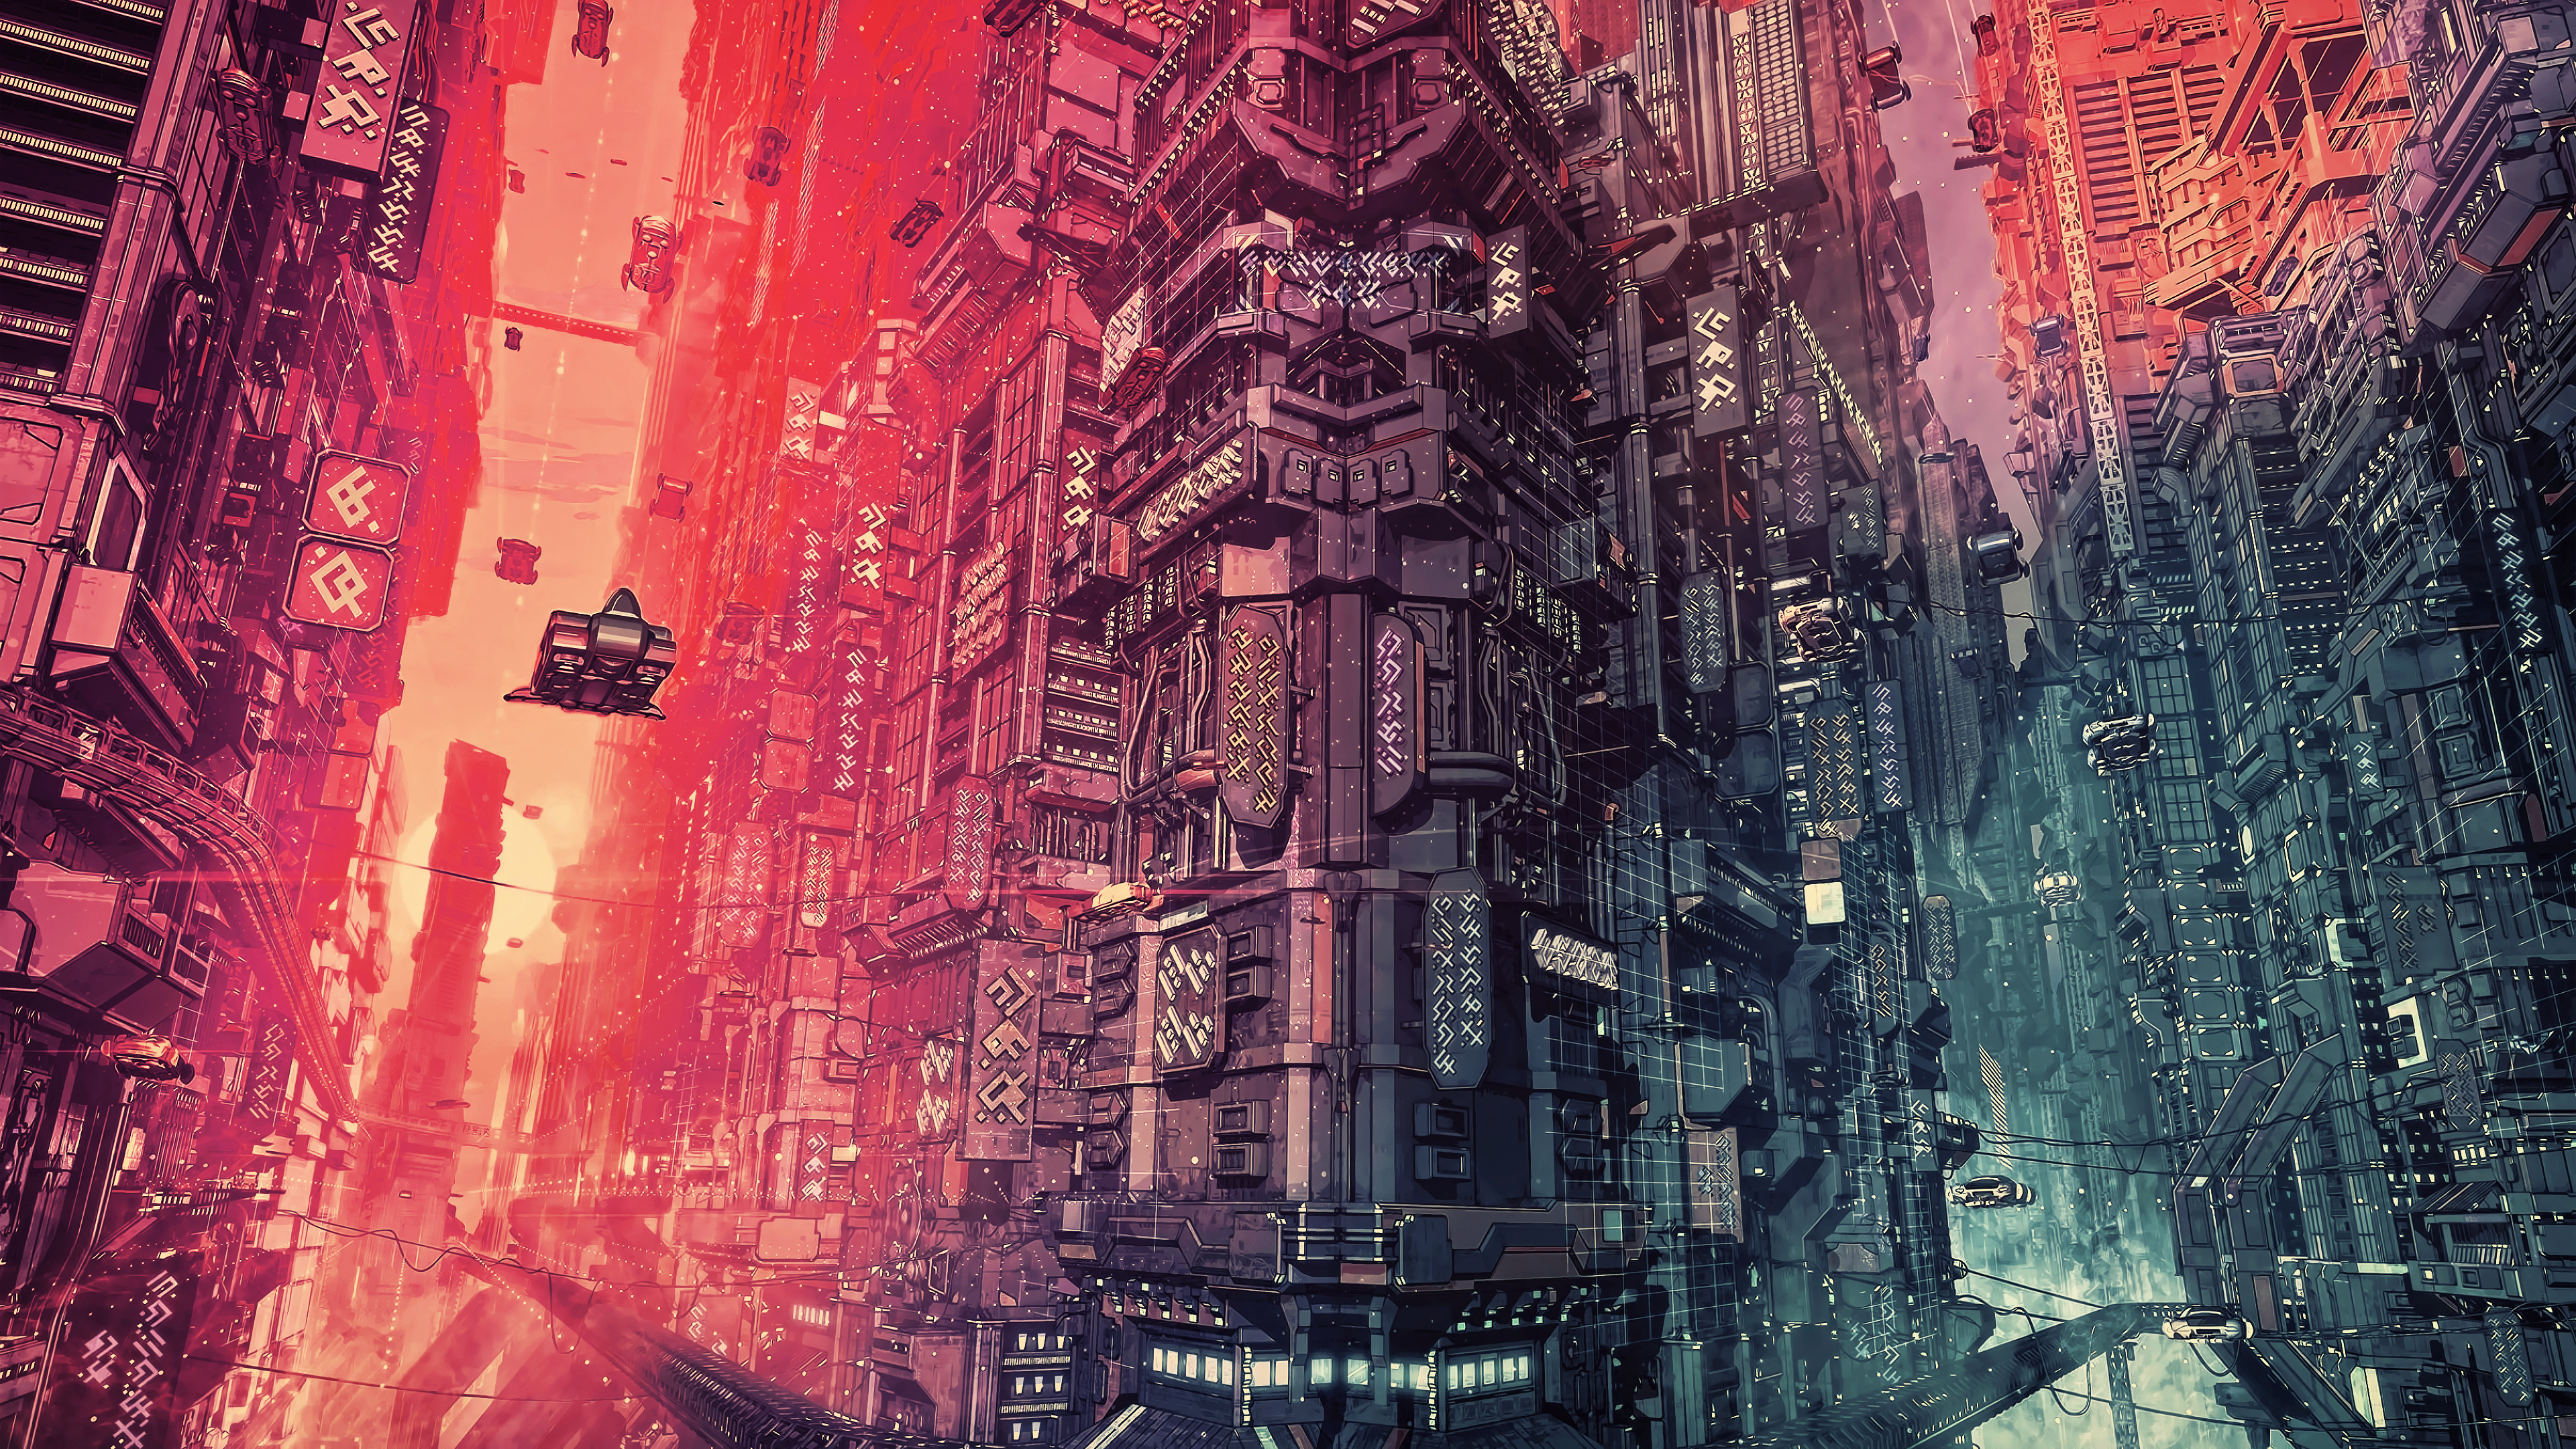 Cyber Futuristic City Fantasy Art 4K Wallpaper,Hd Artist Wallpapers,4K